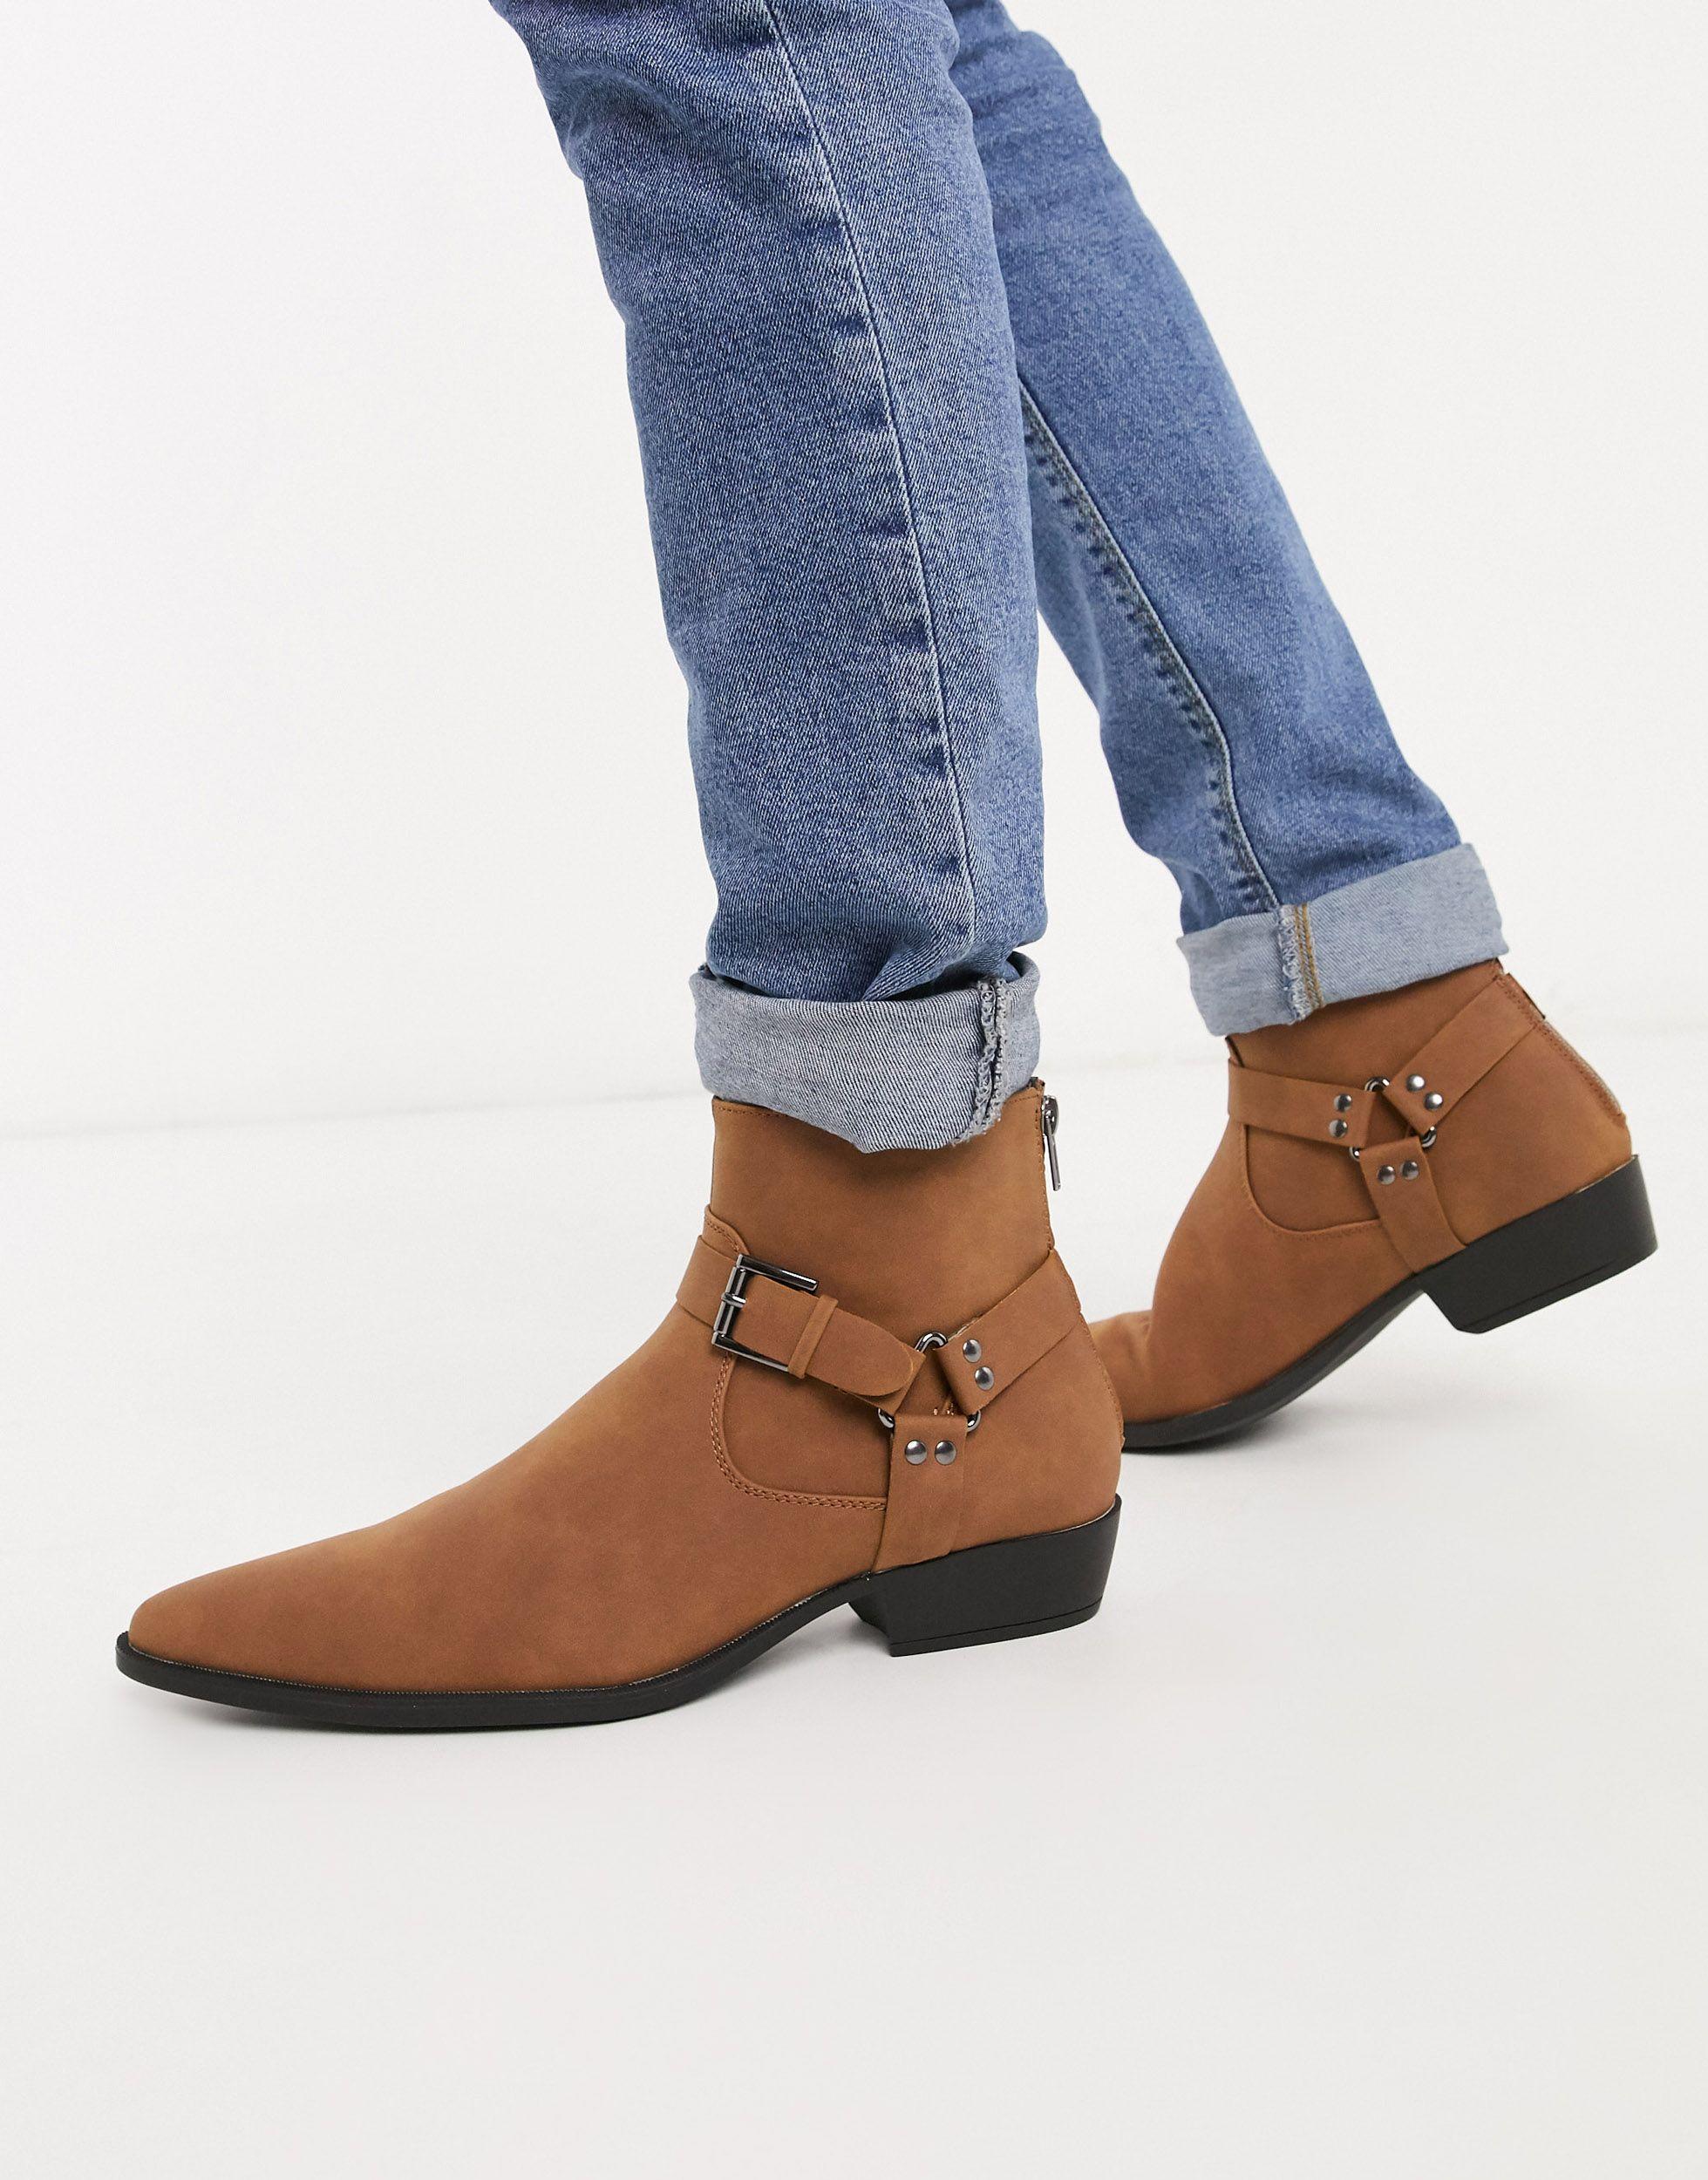 ASOS Stacked Heel Western Chelsea Boots in Tan (Brown) for Men - Lyst